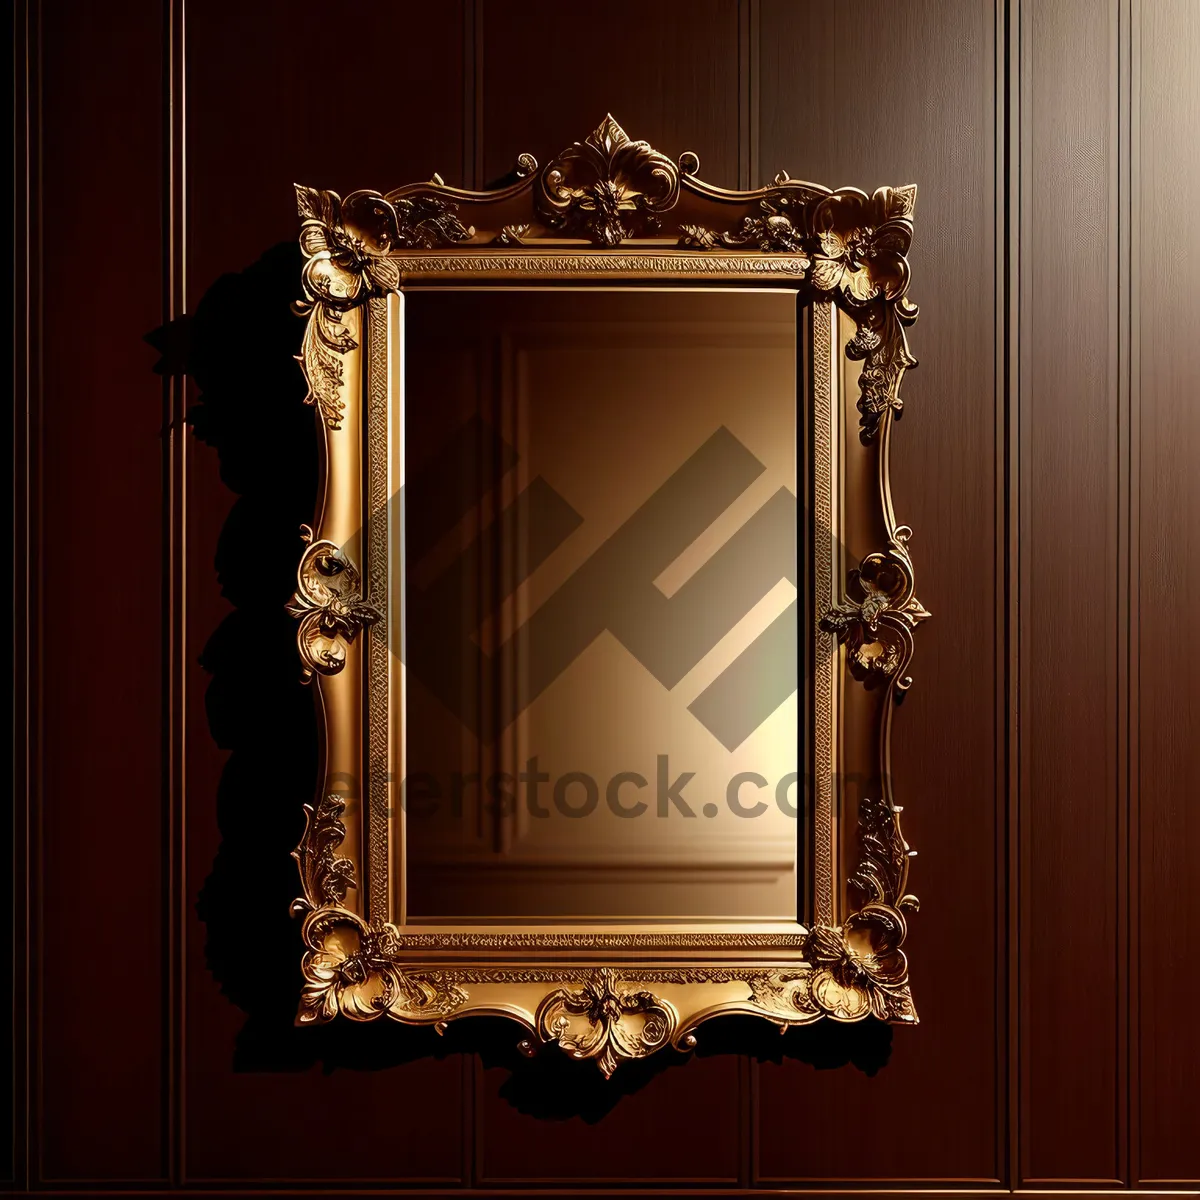 Picture of Vintage Golden Wooden Frame with Ornate Antique Design